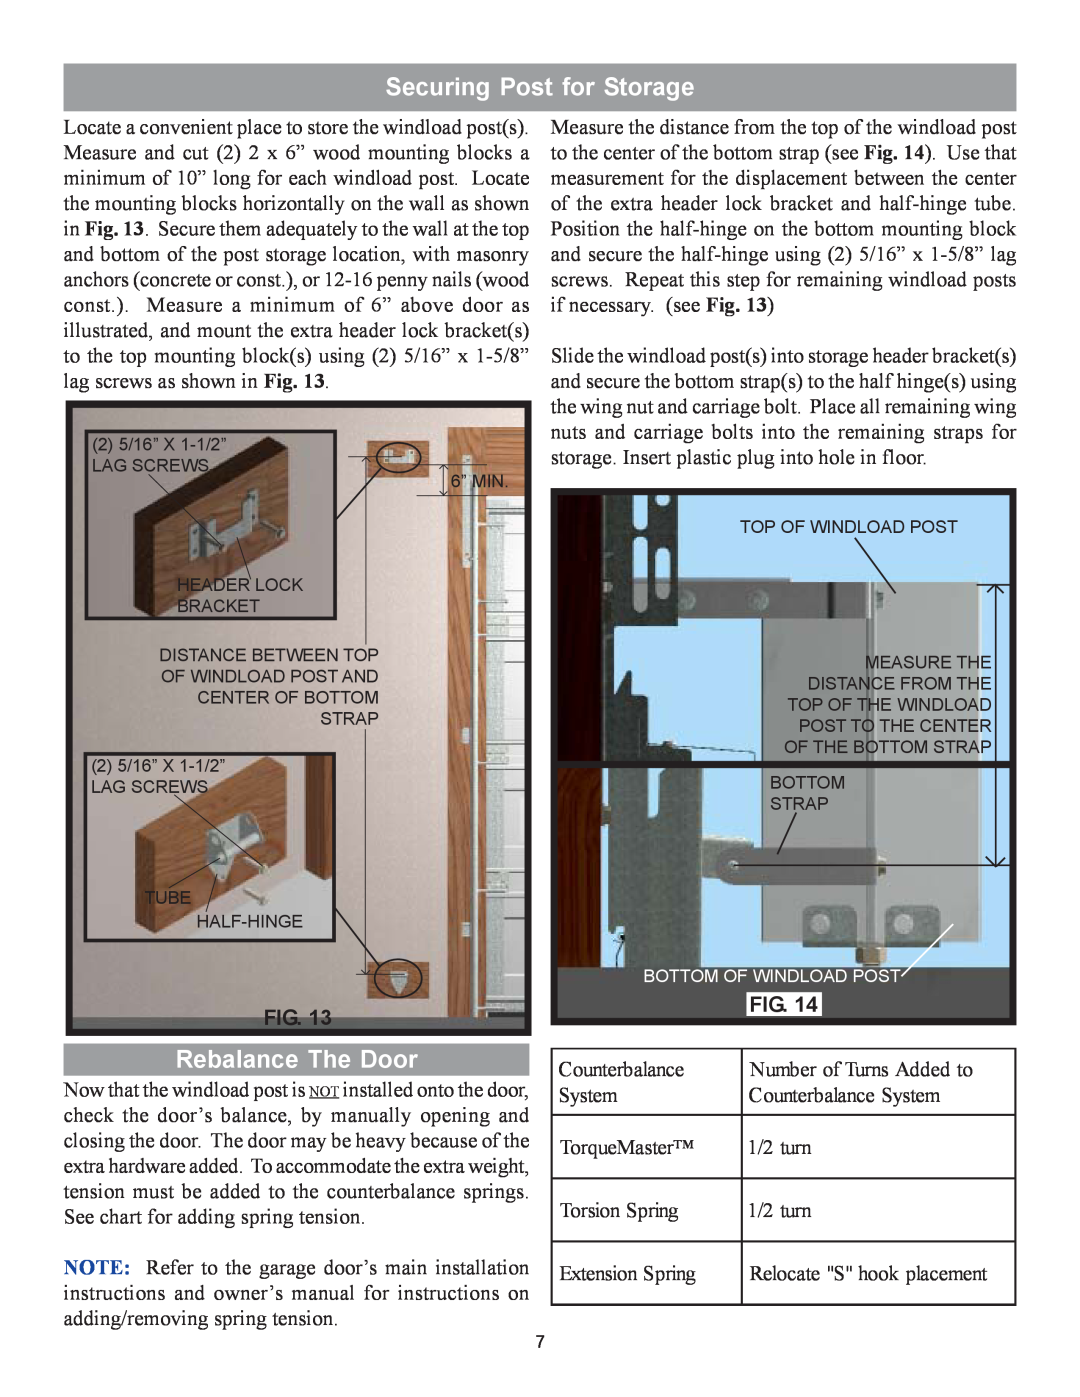 Wayne-Dalton 9100 installation instructions Securing Post for Storage, Rebalance The Door 